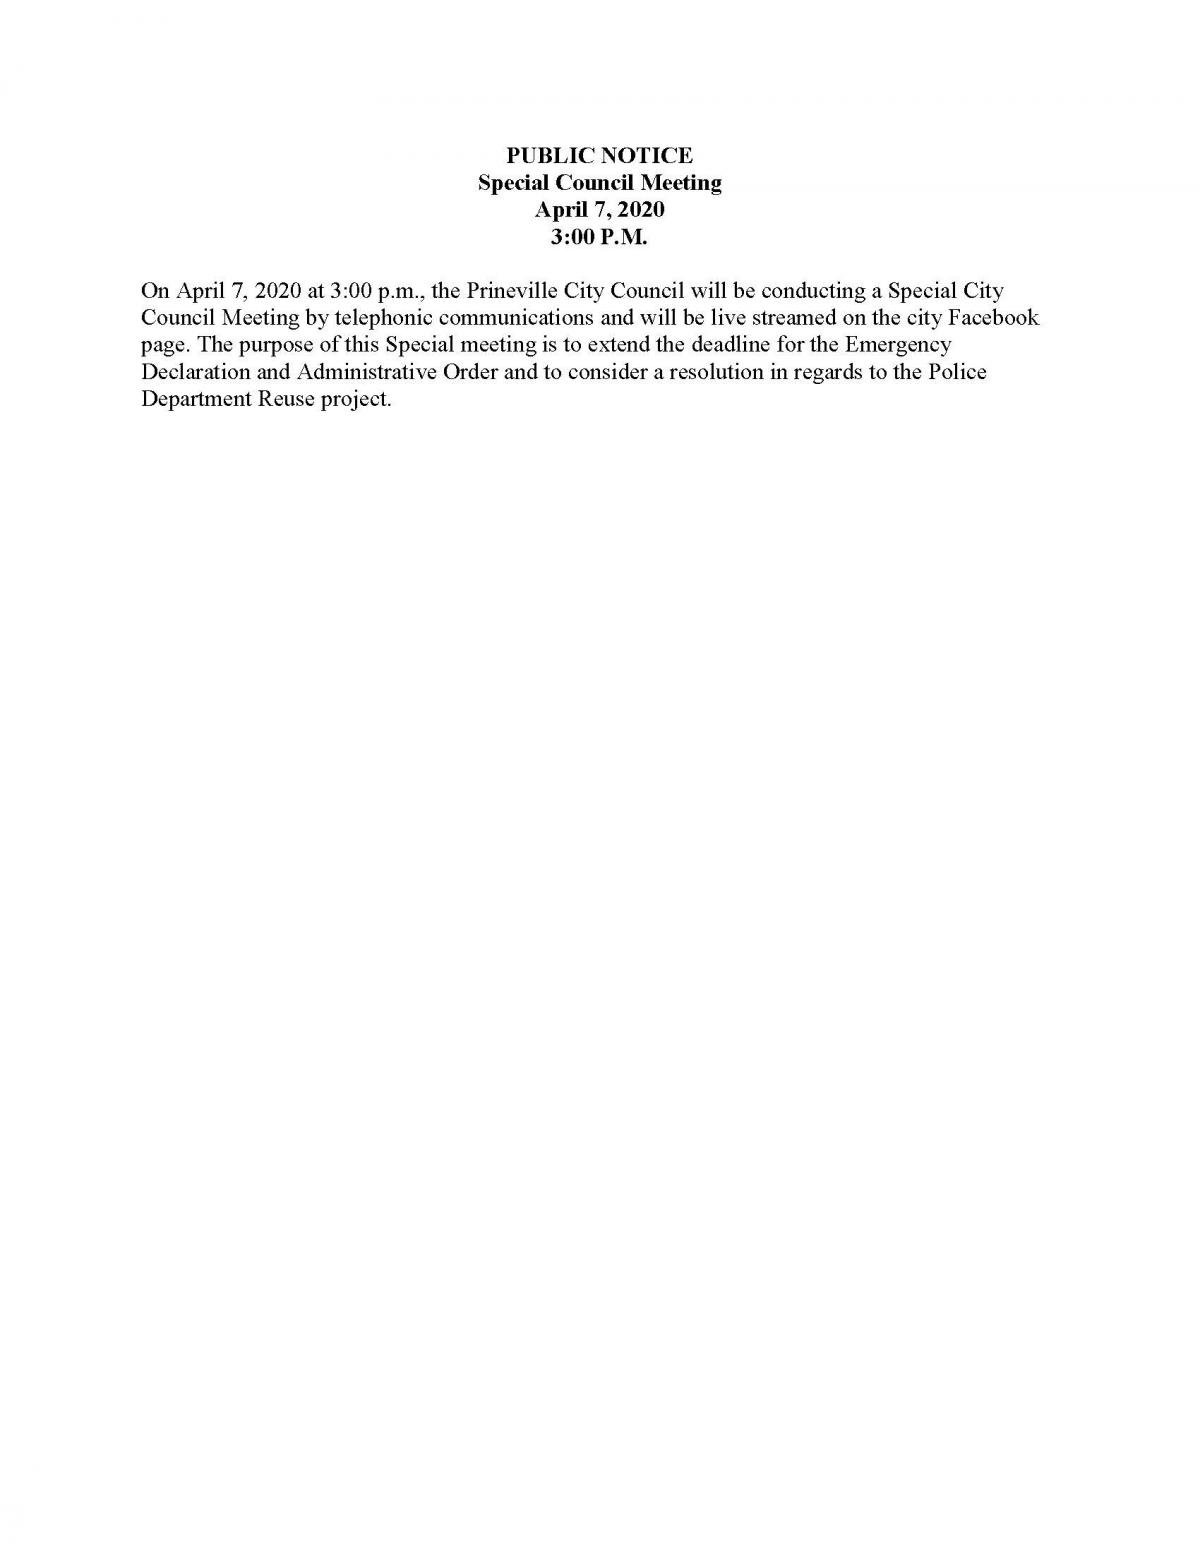 Public Notice - Special Council Meeting 4-7-2020